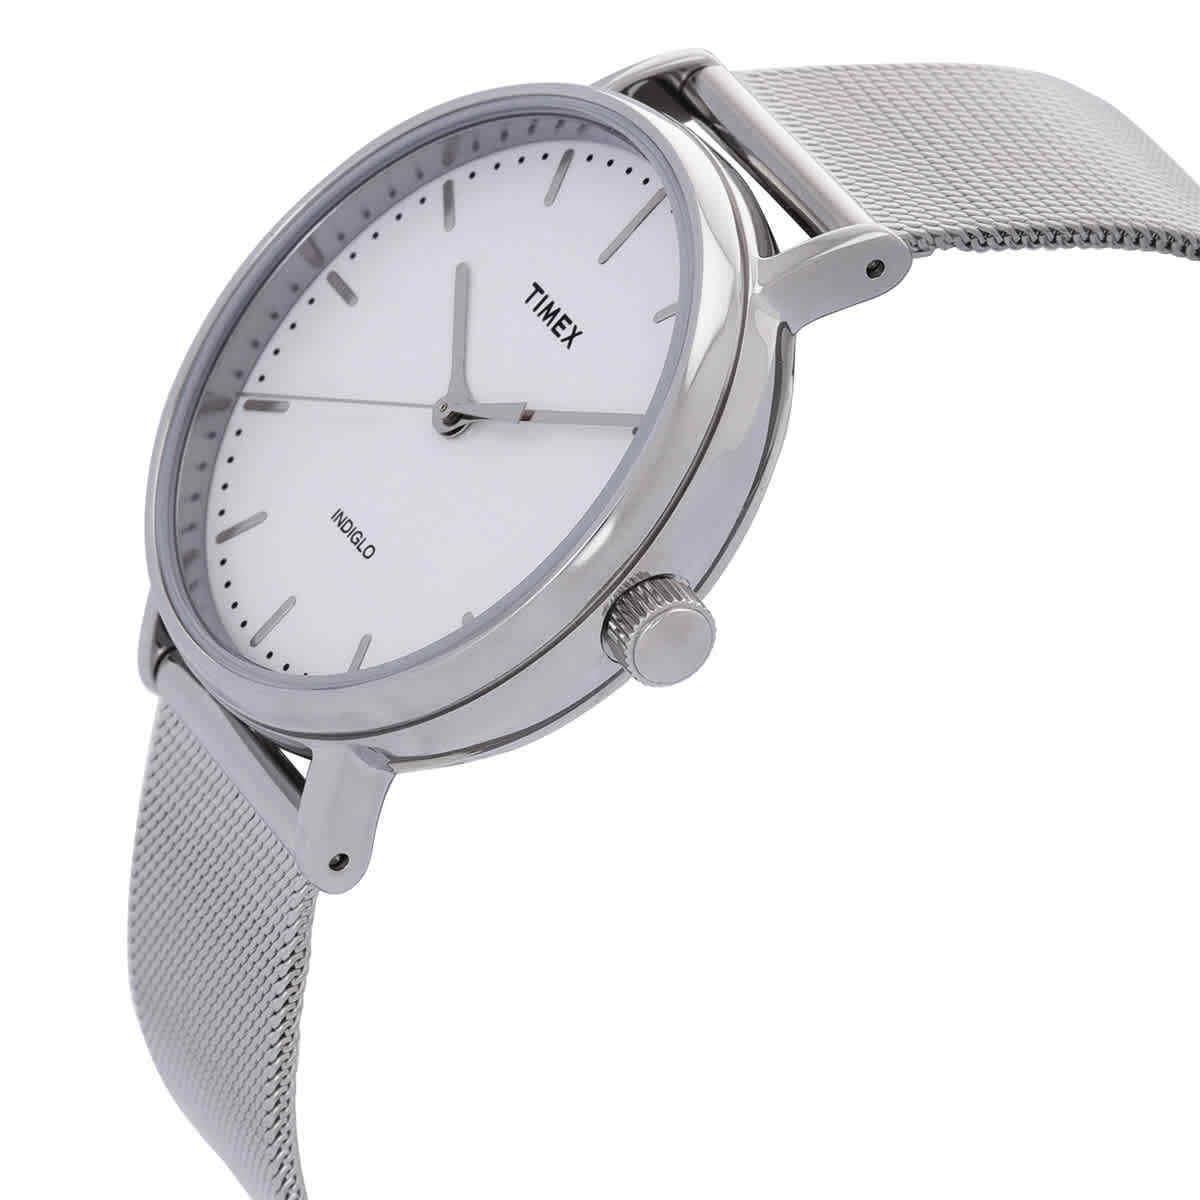 Timex Fairfield Quartz White Dial Ladies Watch TW2R26600 - Dial: White, Band: Silver-tone, Bezel: Silver-tone